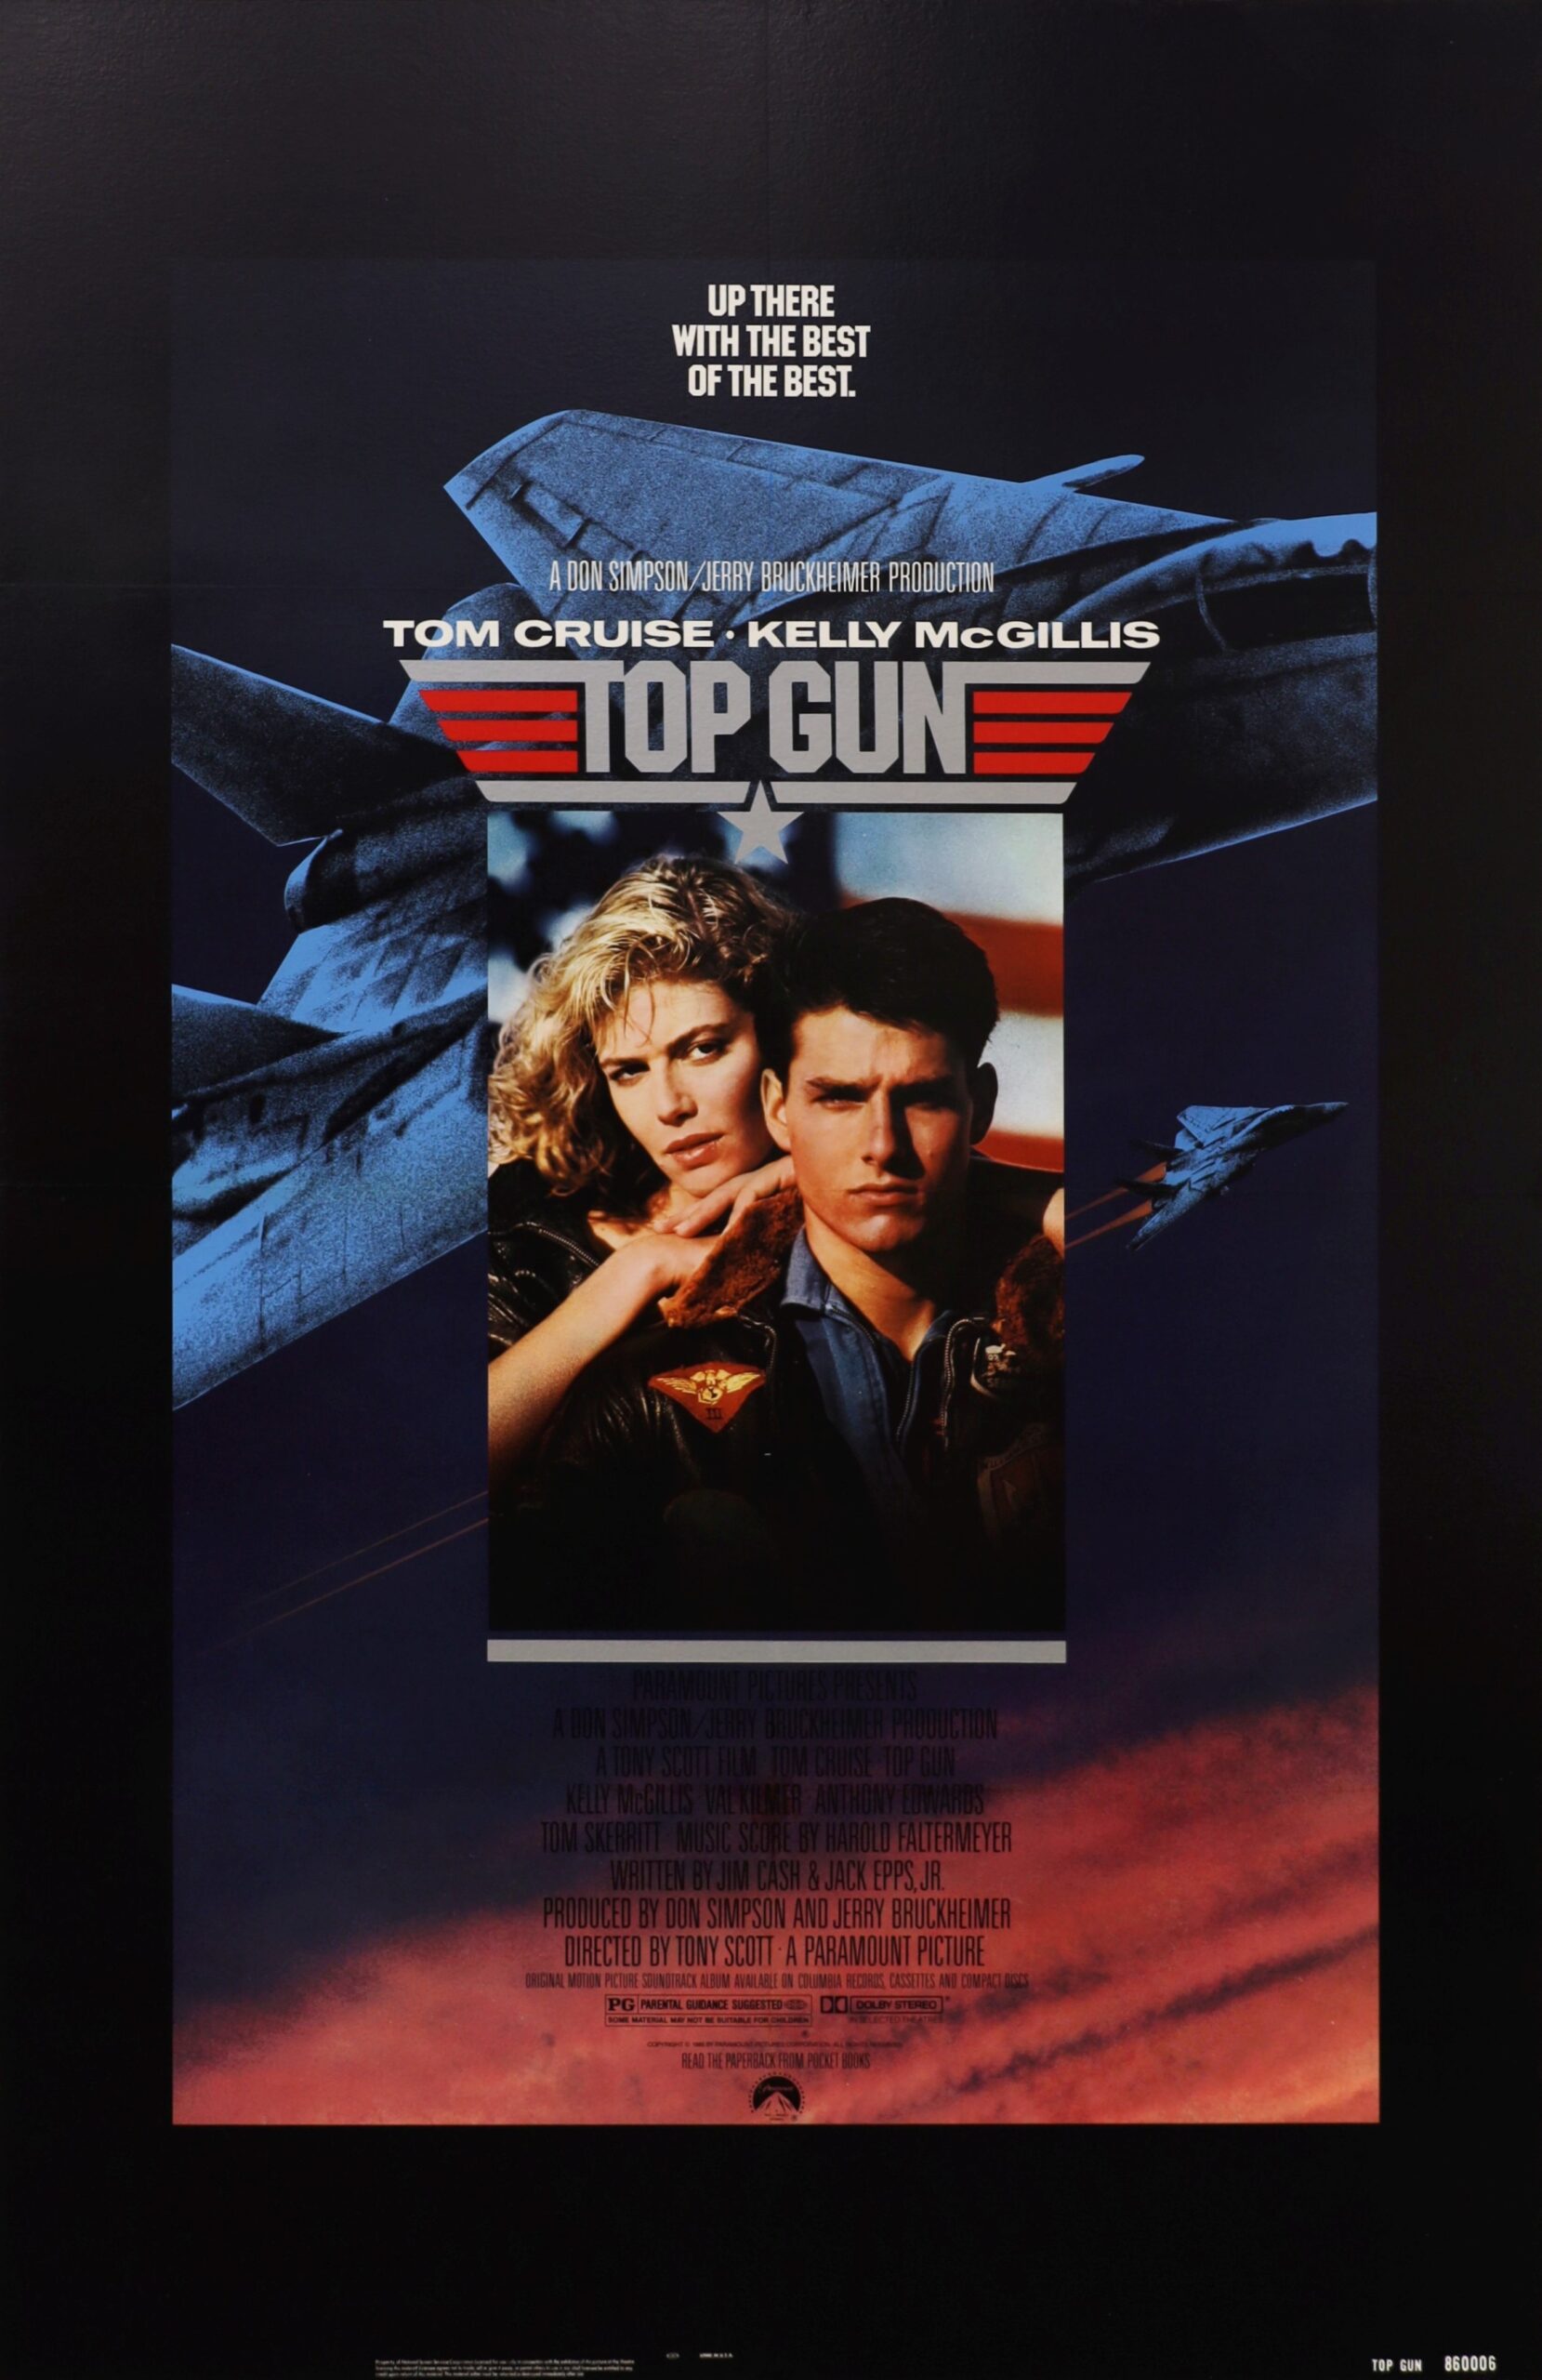 Original vintage cinema movie poster for Top Gun starring Tom Cruise